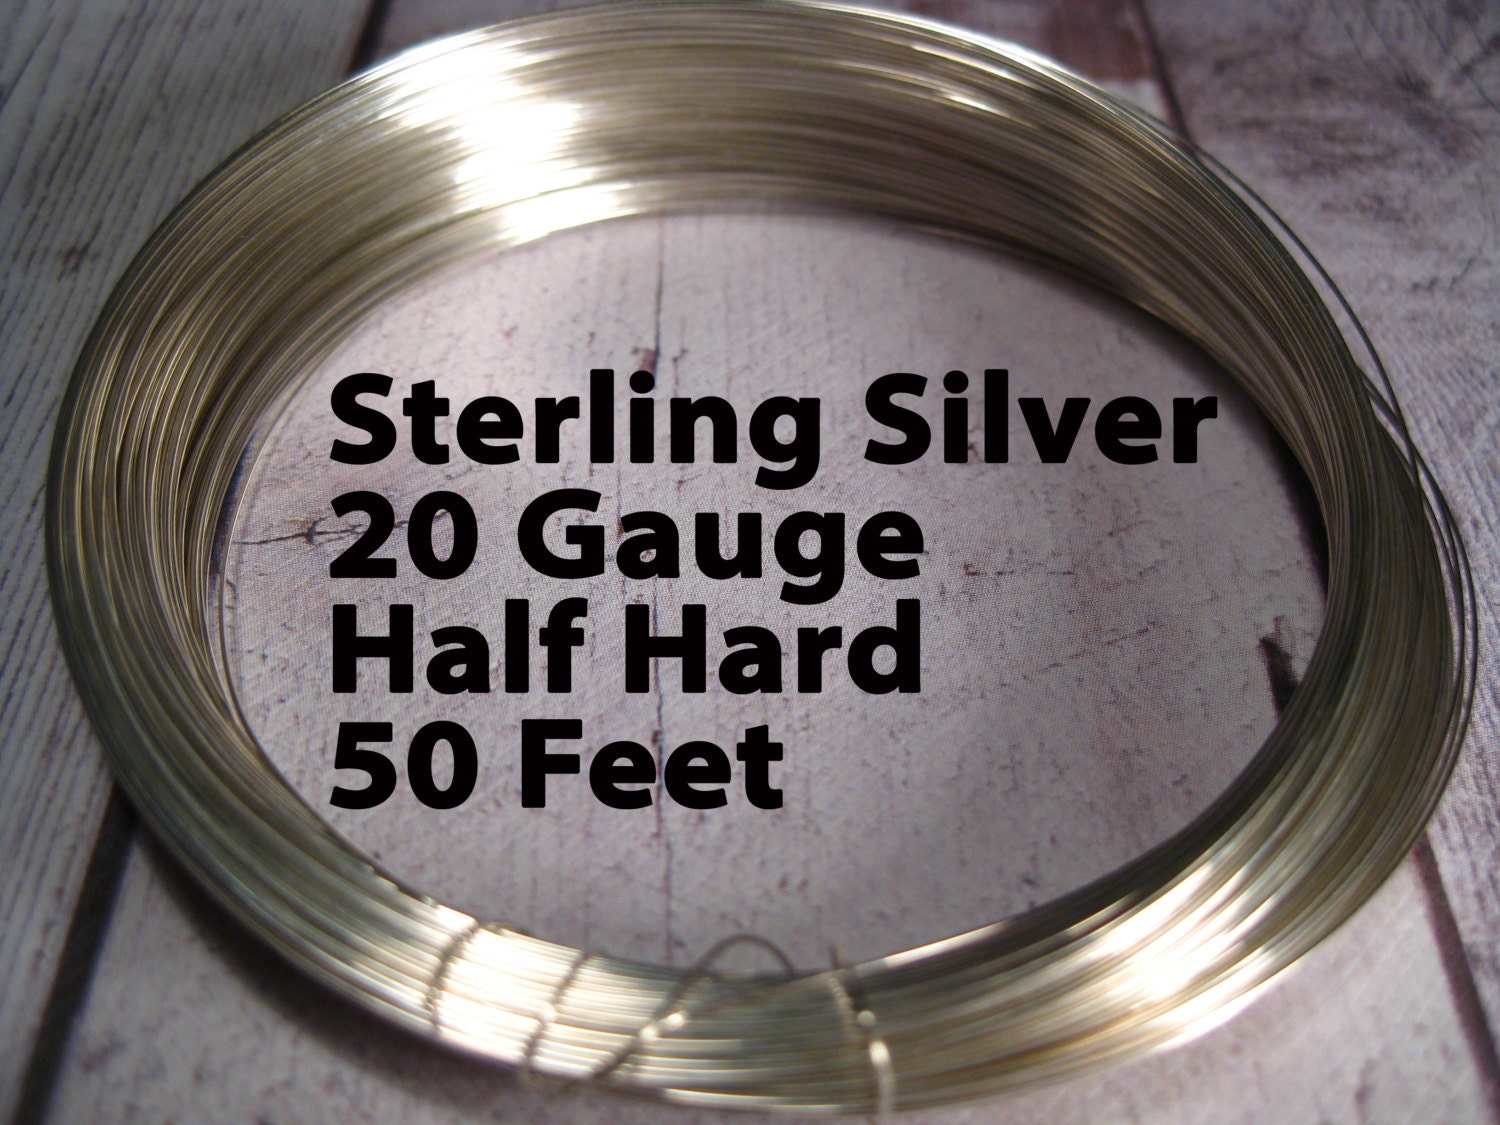 Double Half Round Wire, 10 Gauge Sterling Silver Wire, 5mm X 1.2mm